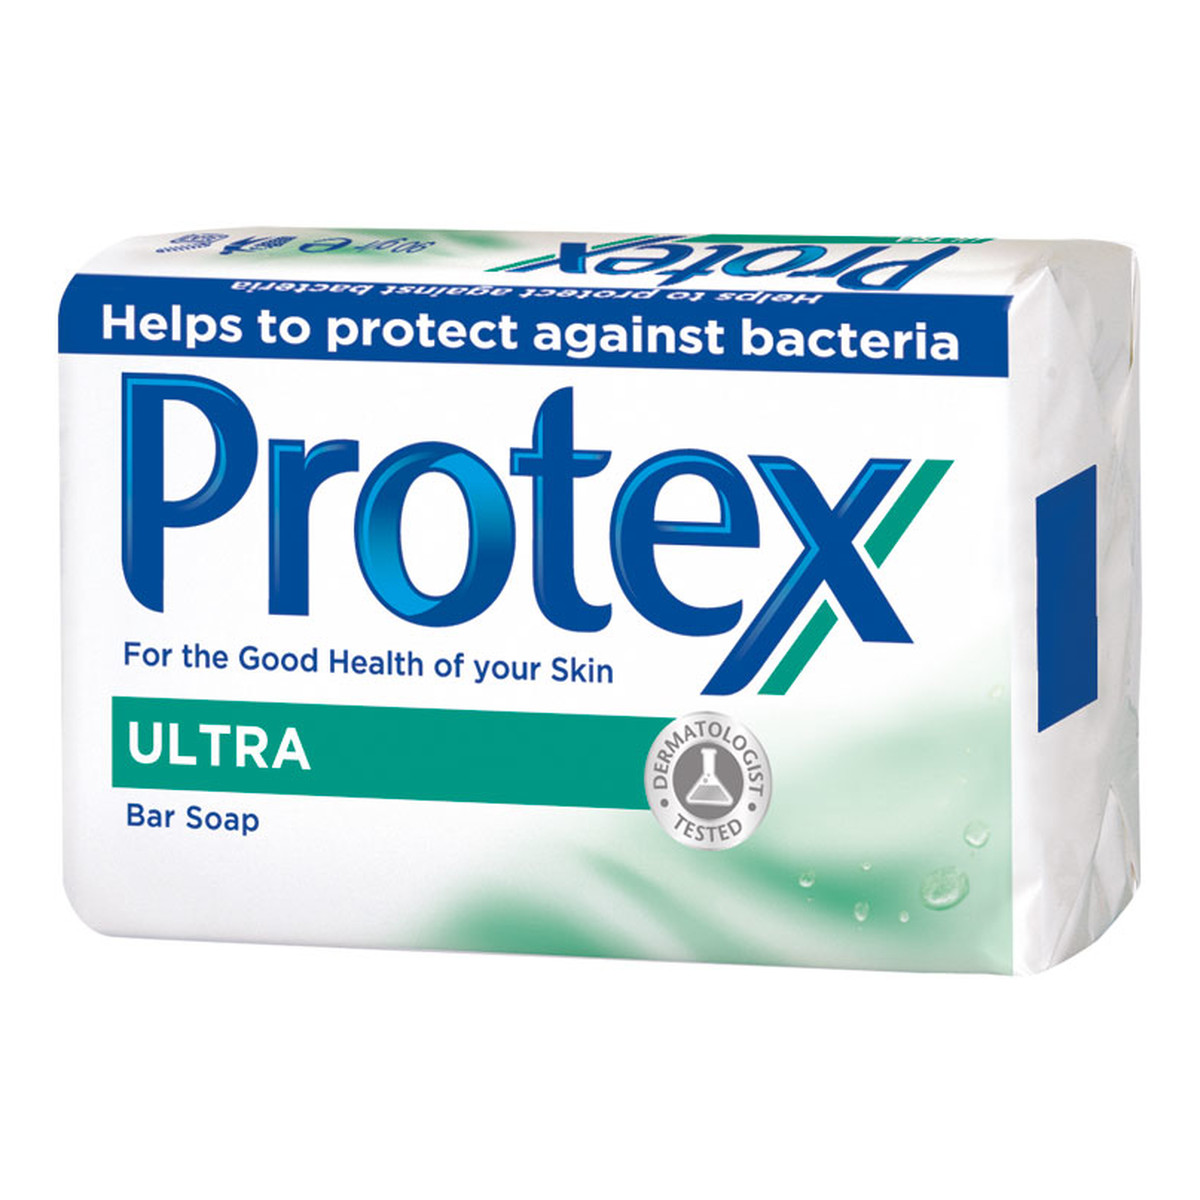 Protex Ultra Mydło antybakteryjne 90g